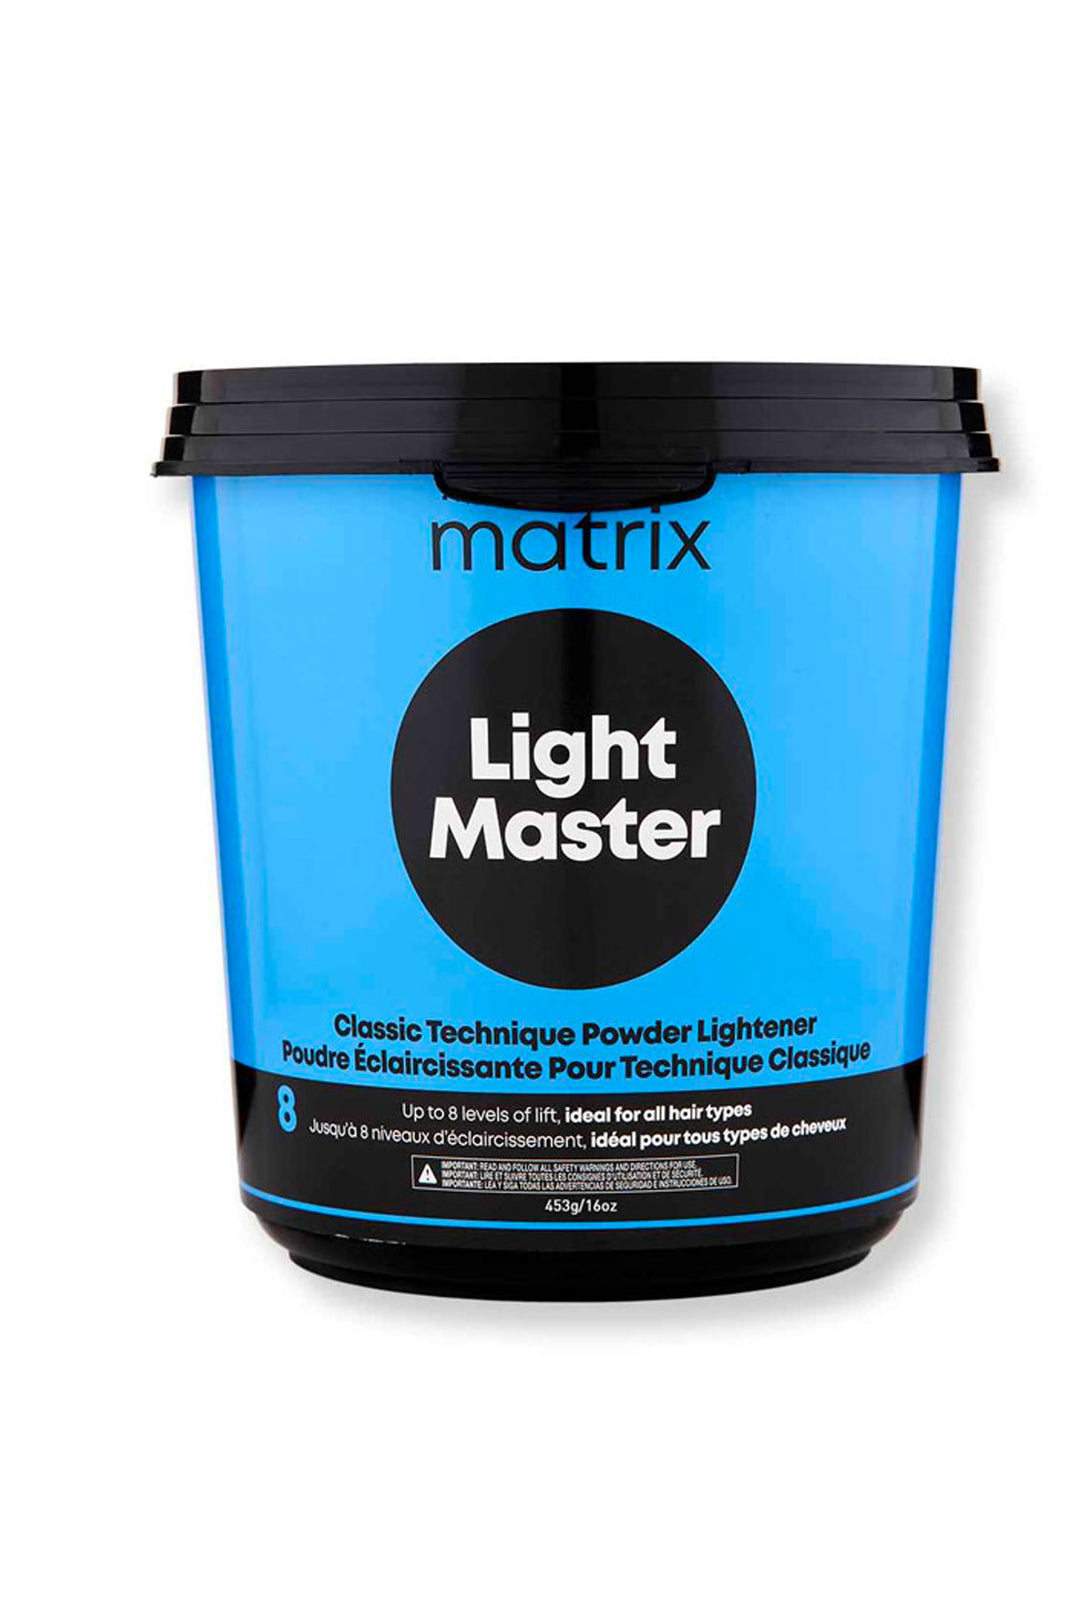 MATRIX LIGHT MASTER CLASSIC TECHNIQUE POWDER LIGHTENER UP TO 8 LEVELS 453G